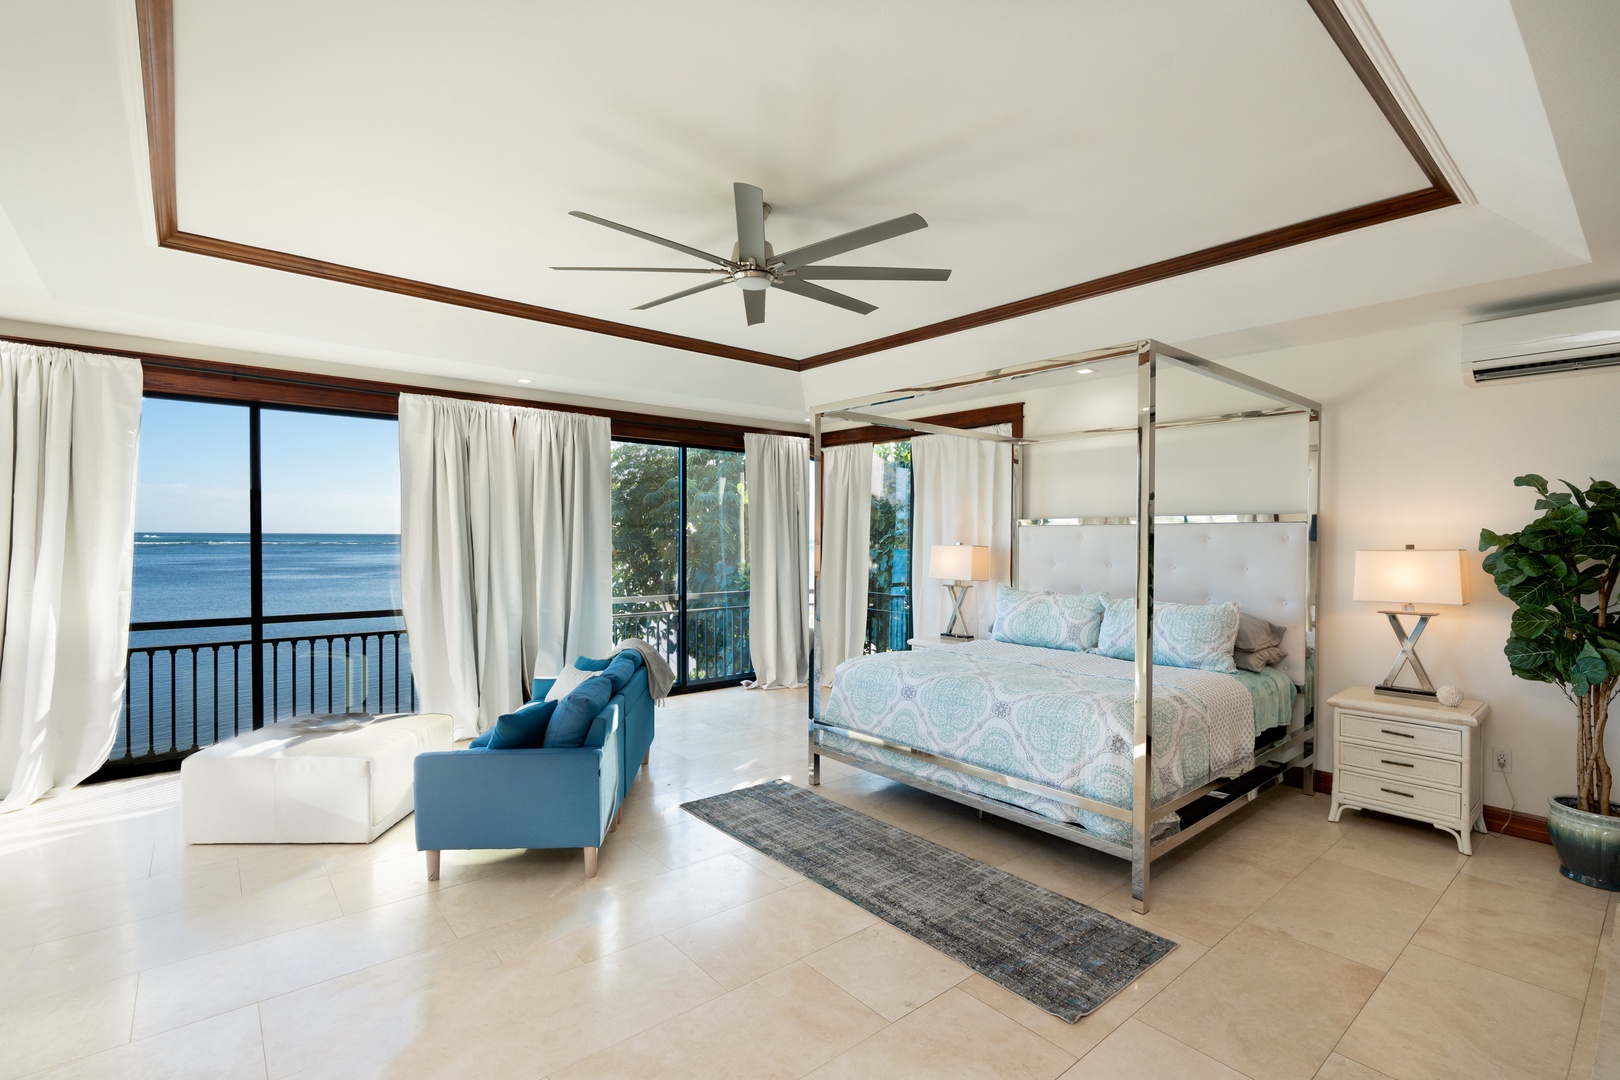 Honolulu Vacation Rentals, Wailupe Seaside - Tropical breeze with balcony to enjoy the views.